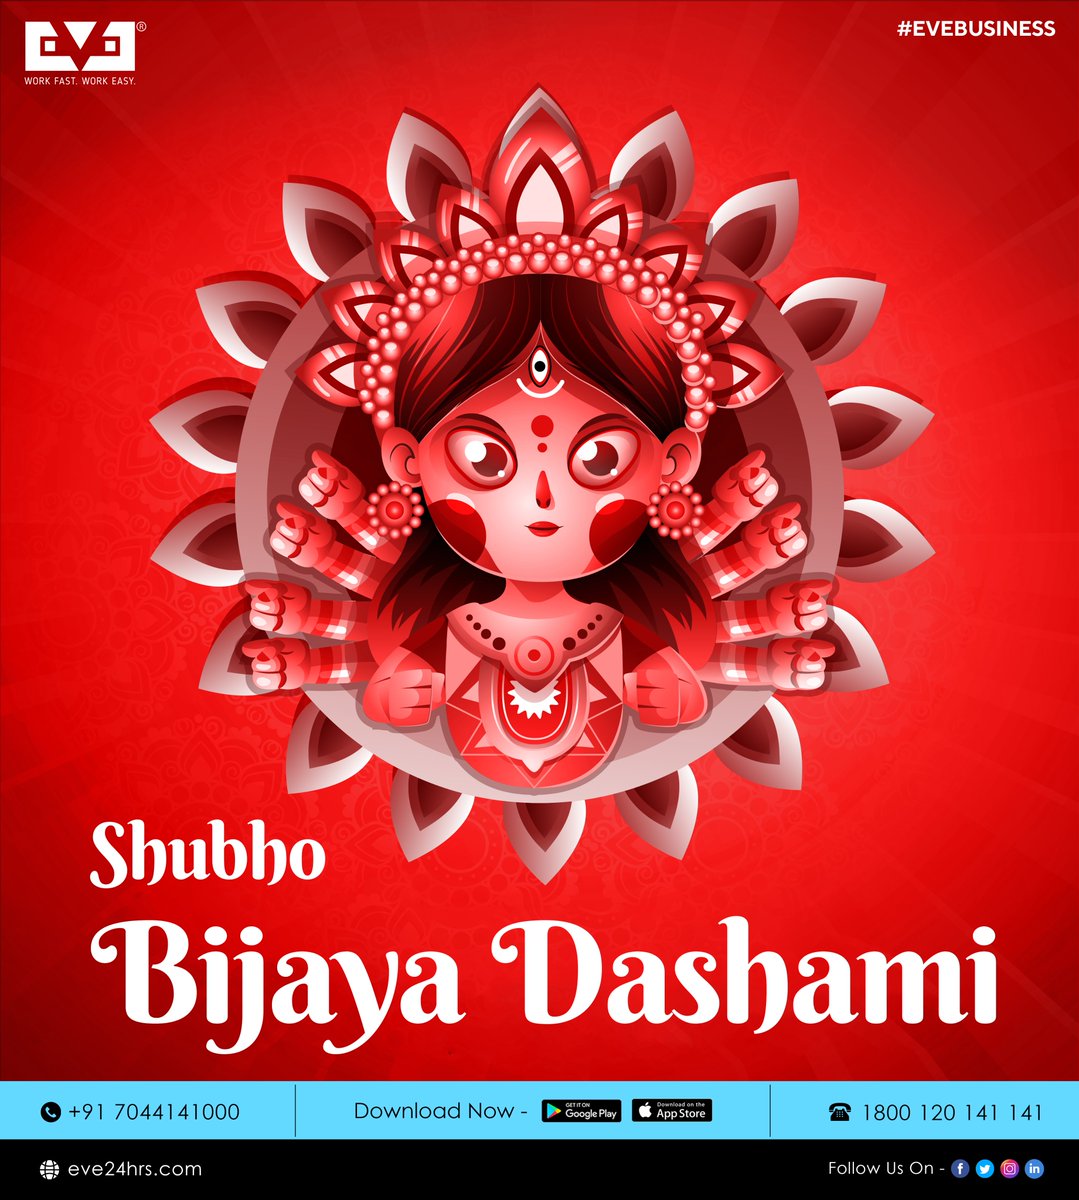 Shubho Bijaya Dashami from all of us at EVE !

#BijayaDashami #ShubhoBijaya #ShubhoBijoya #Dashami #DurgaPuja #DurgaPuja2020 #DurgaPujo #ShubhoSharodiya #MahaNabami #Navaratri #navaratri2020 #durgapujaspecial #durgamaa #festival #festiveseason #festivevibes #biggestfestival